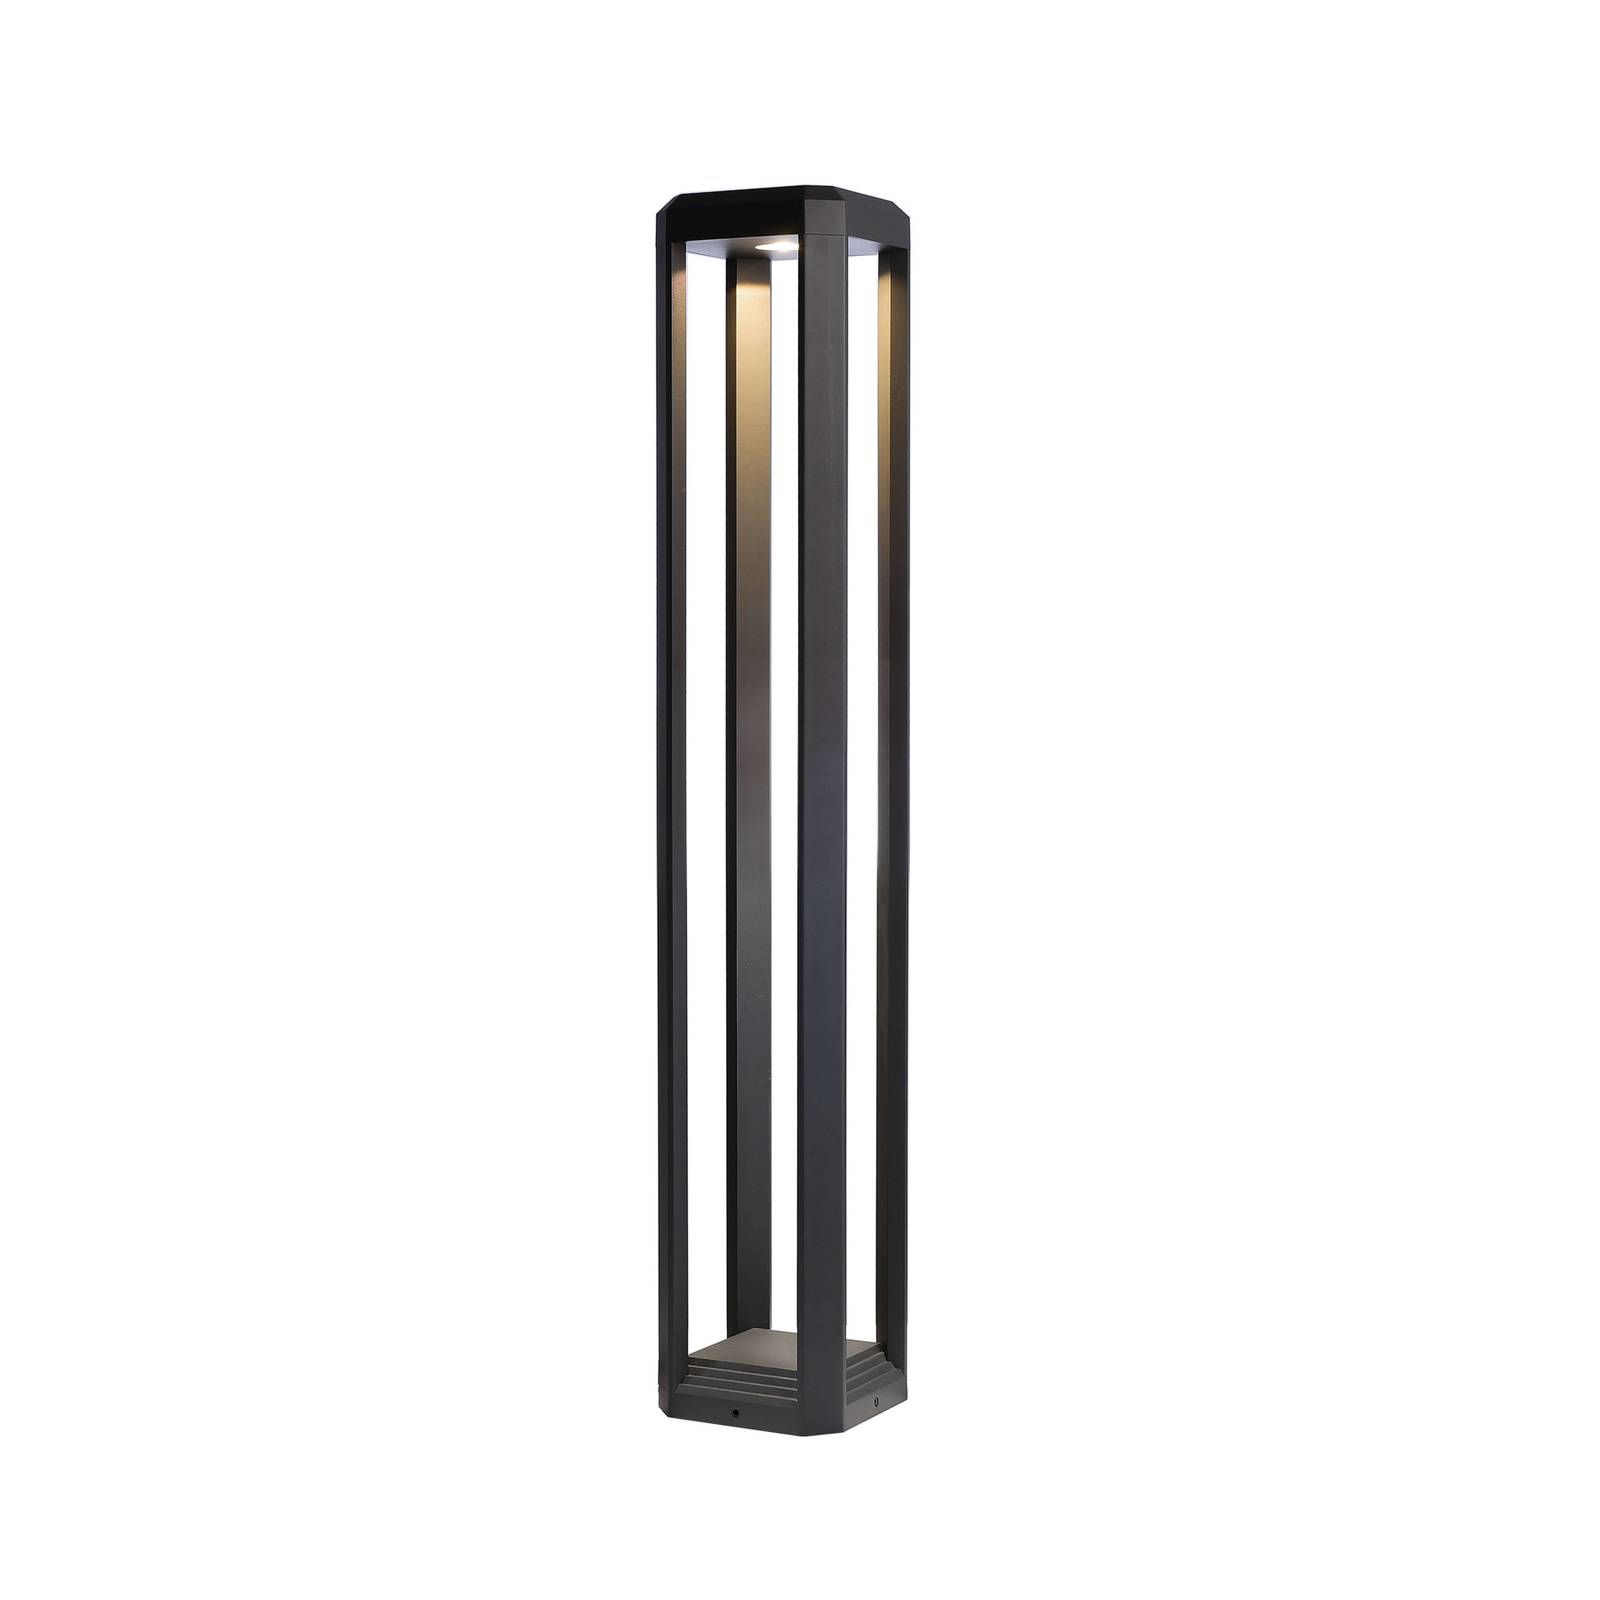 Deko-Light LED-Wegeleuchte Rubkat, grau, Höhe 80 cm